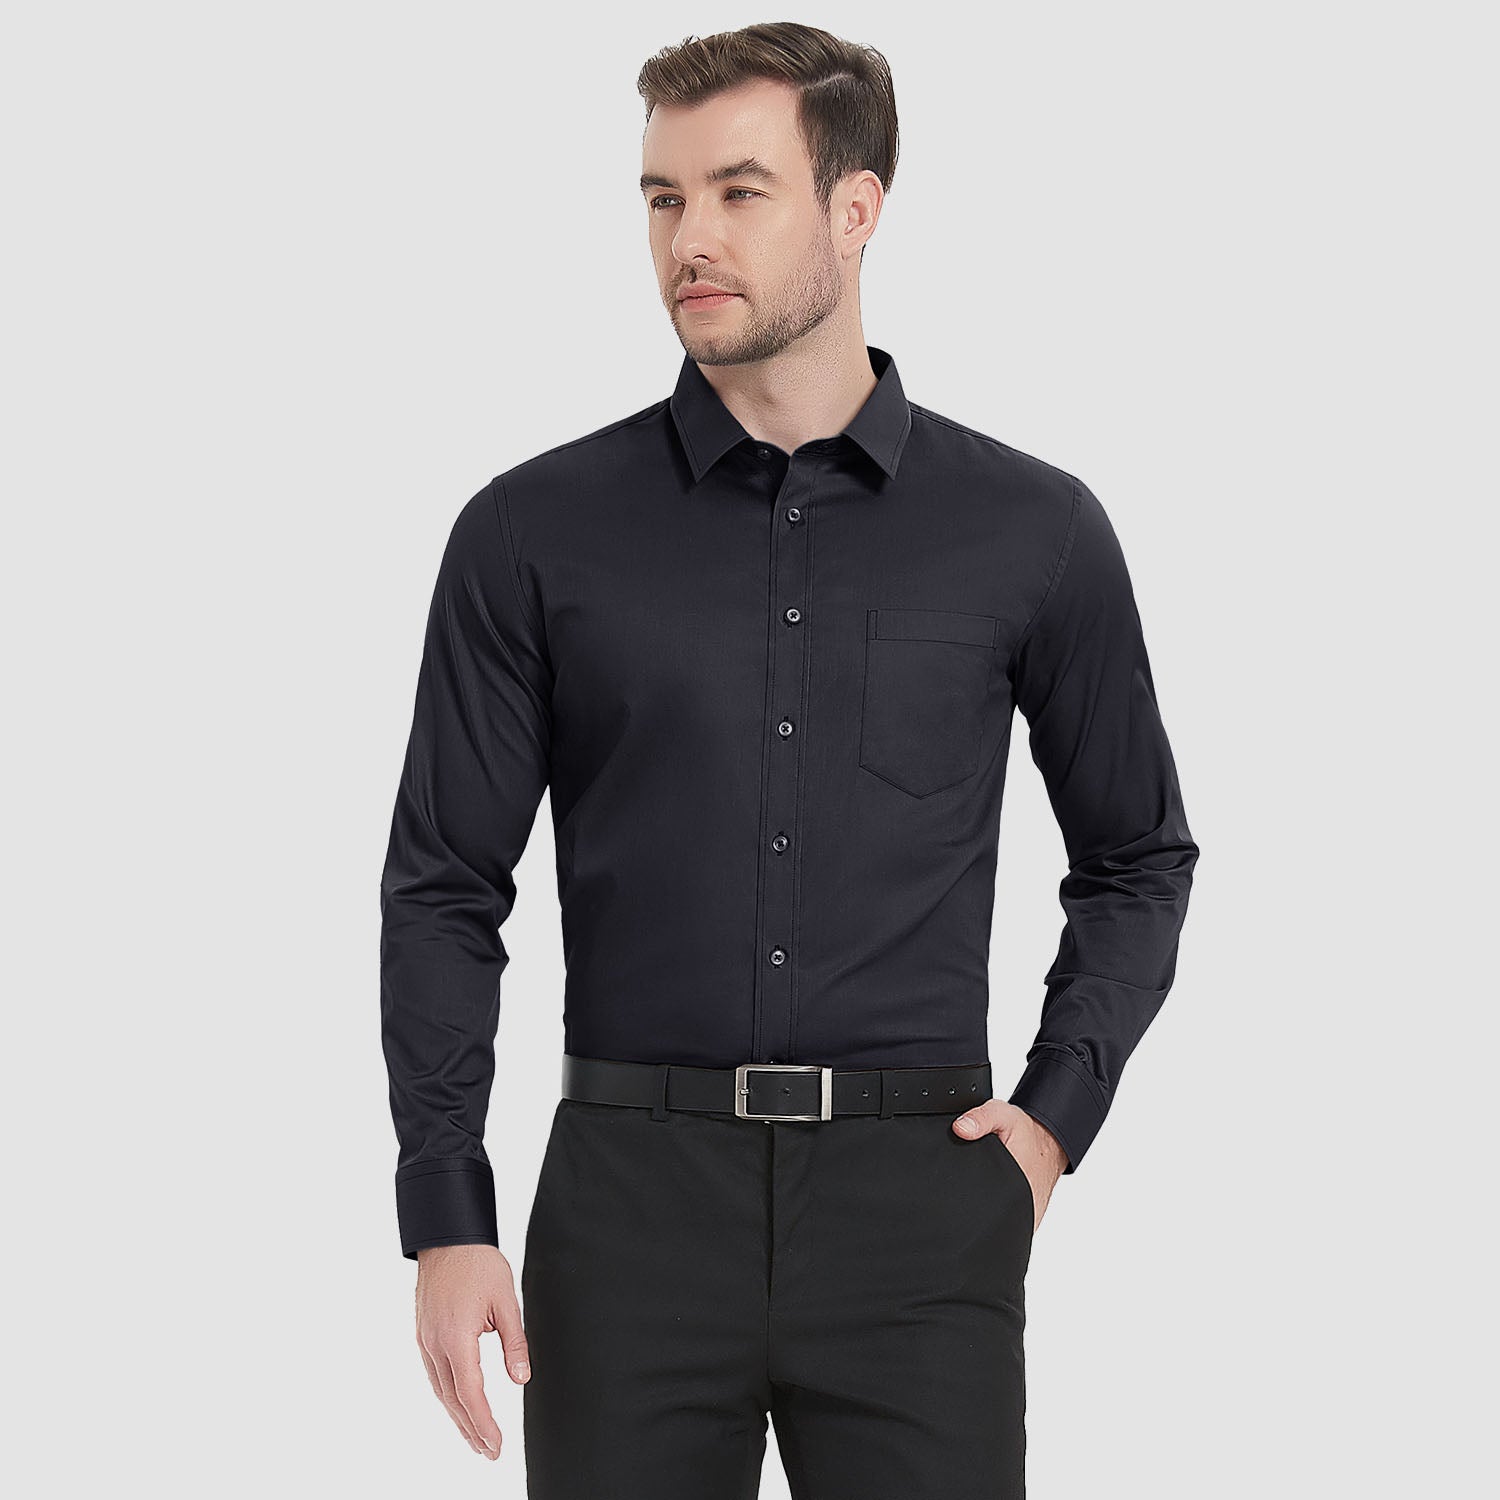 Men's Long Sleeve Dress Shirts with Pocket Cotton Regular Fit Business Shirt